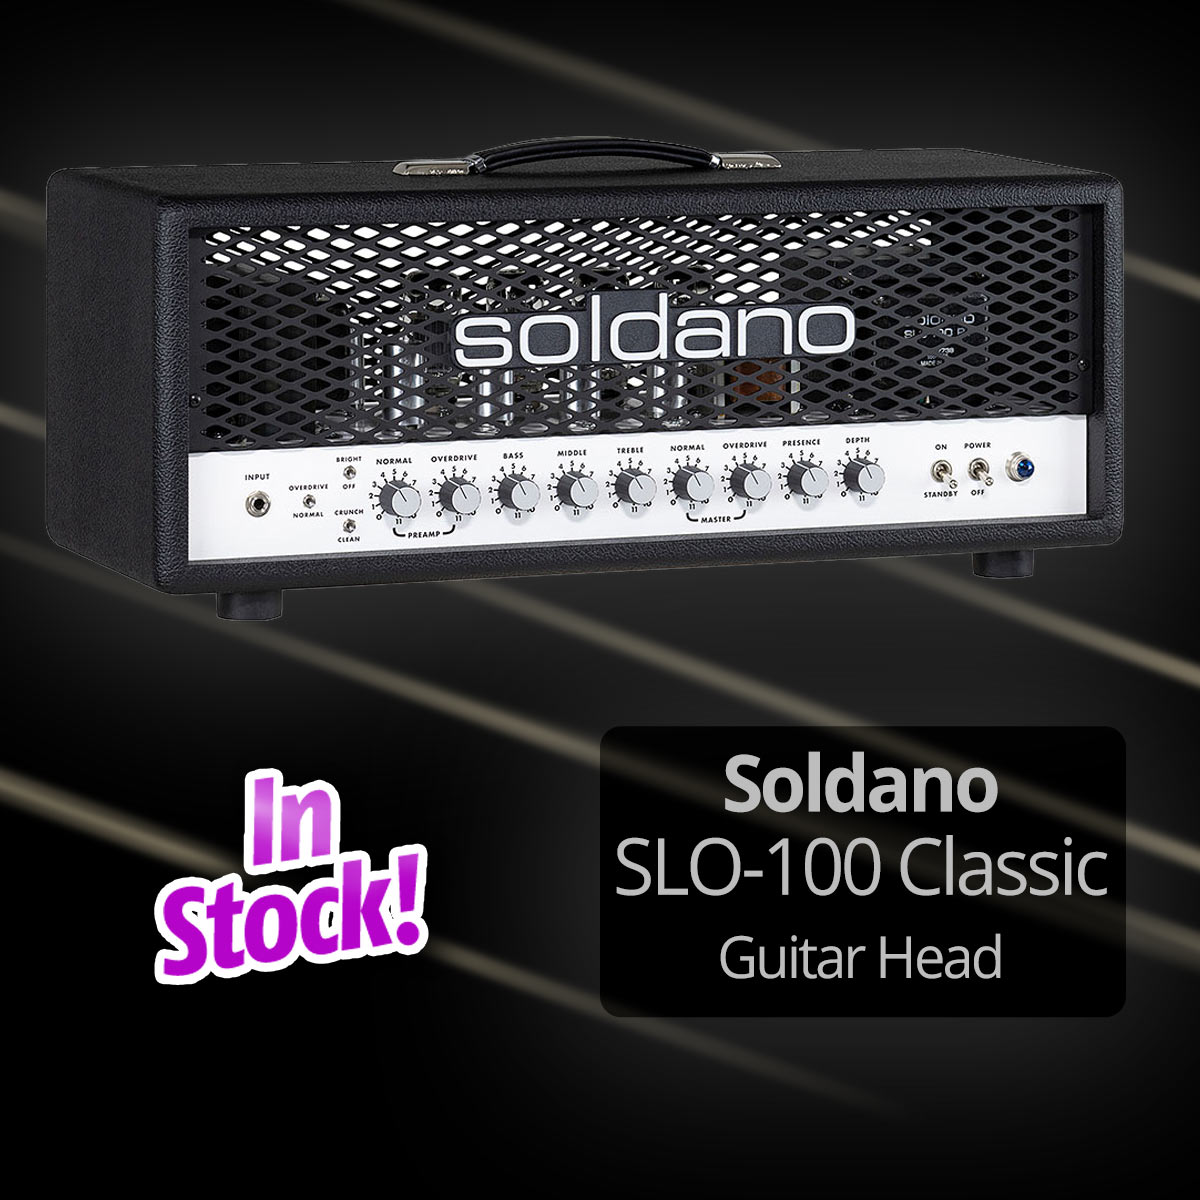 Soldano SLO-100 Classic Guitar Head - In Stock!